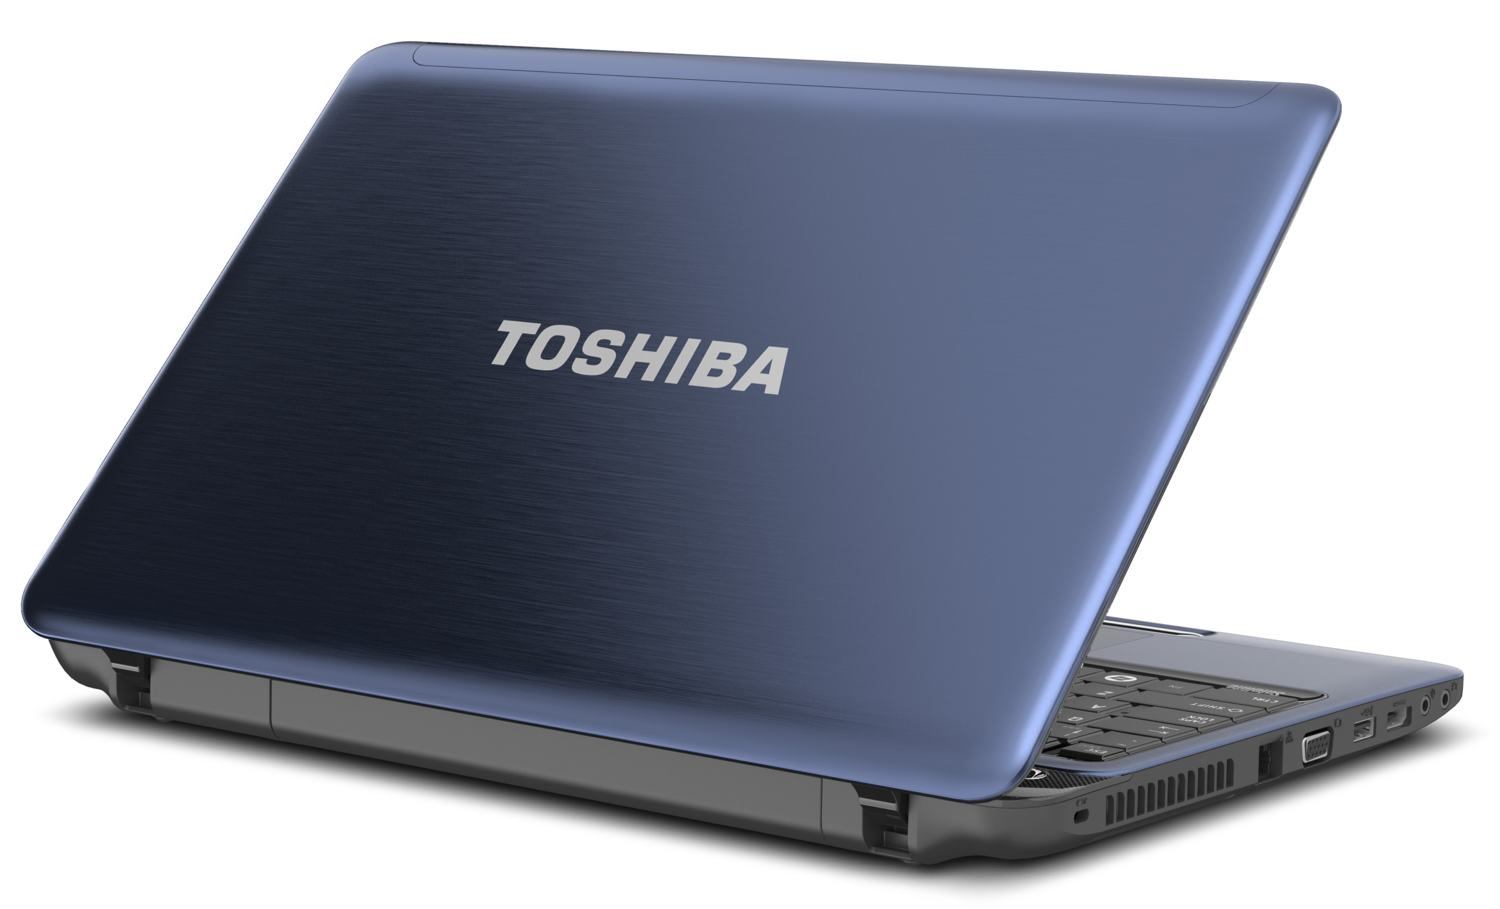 Thay bản lề laptop Toshiba tphcm giá rẻ